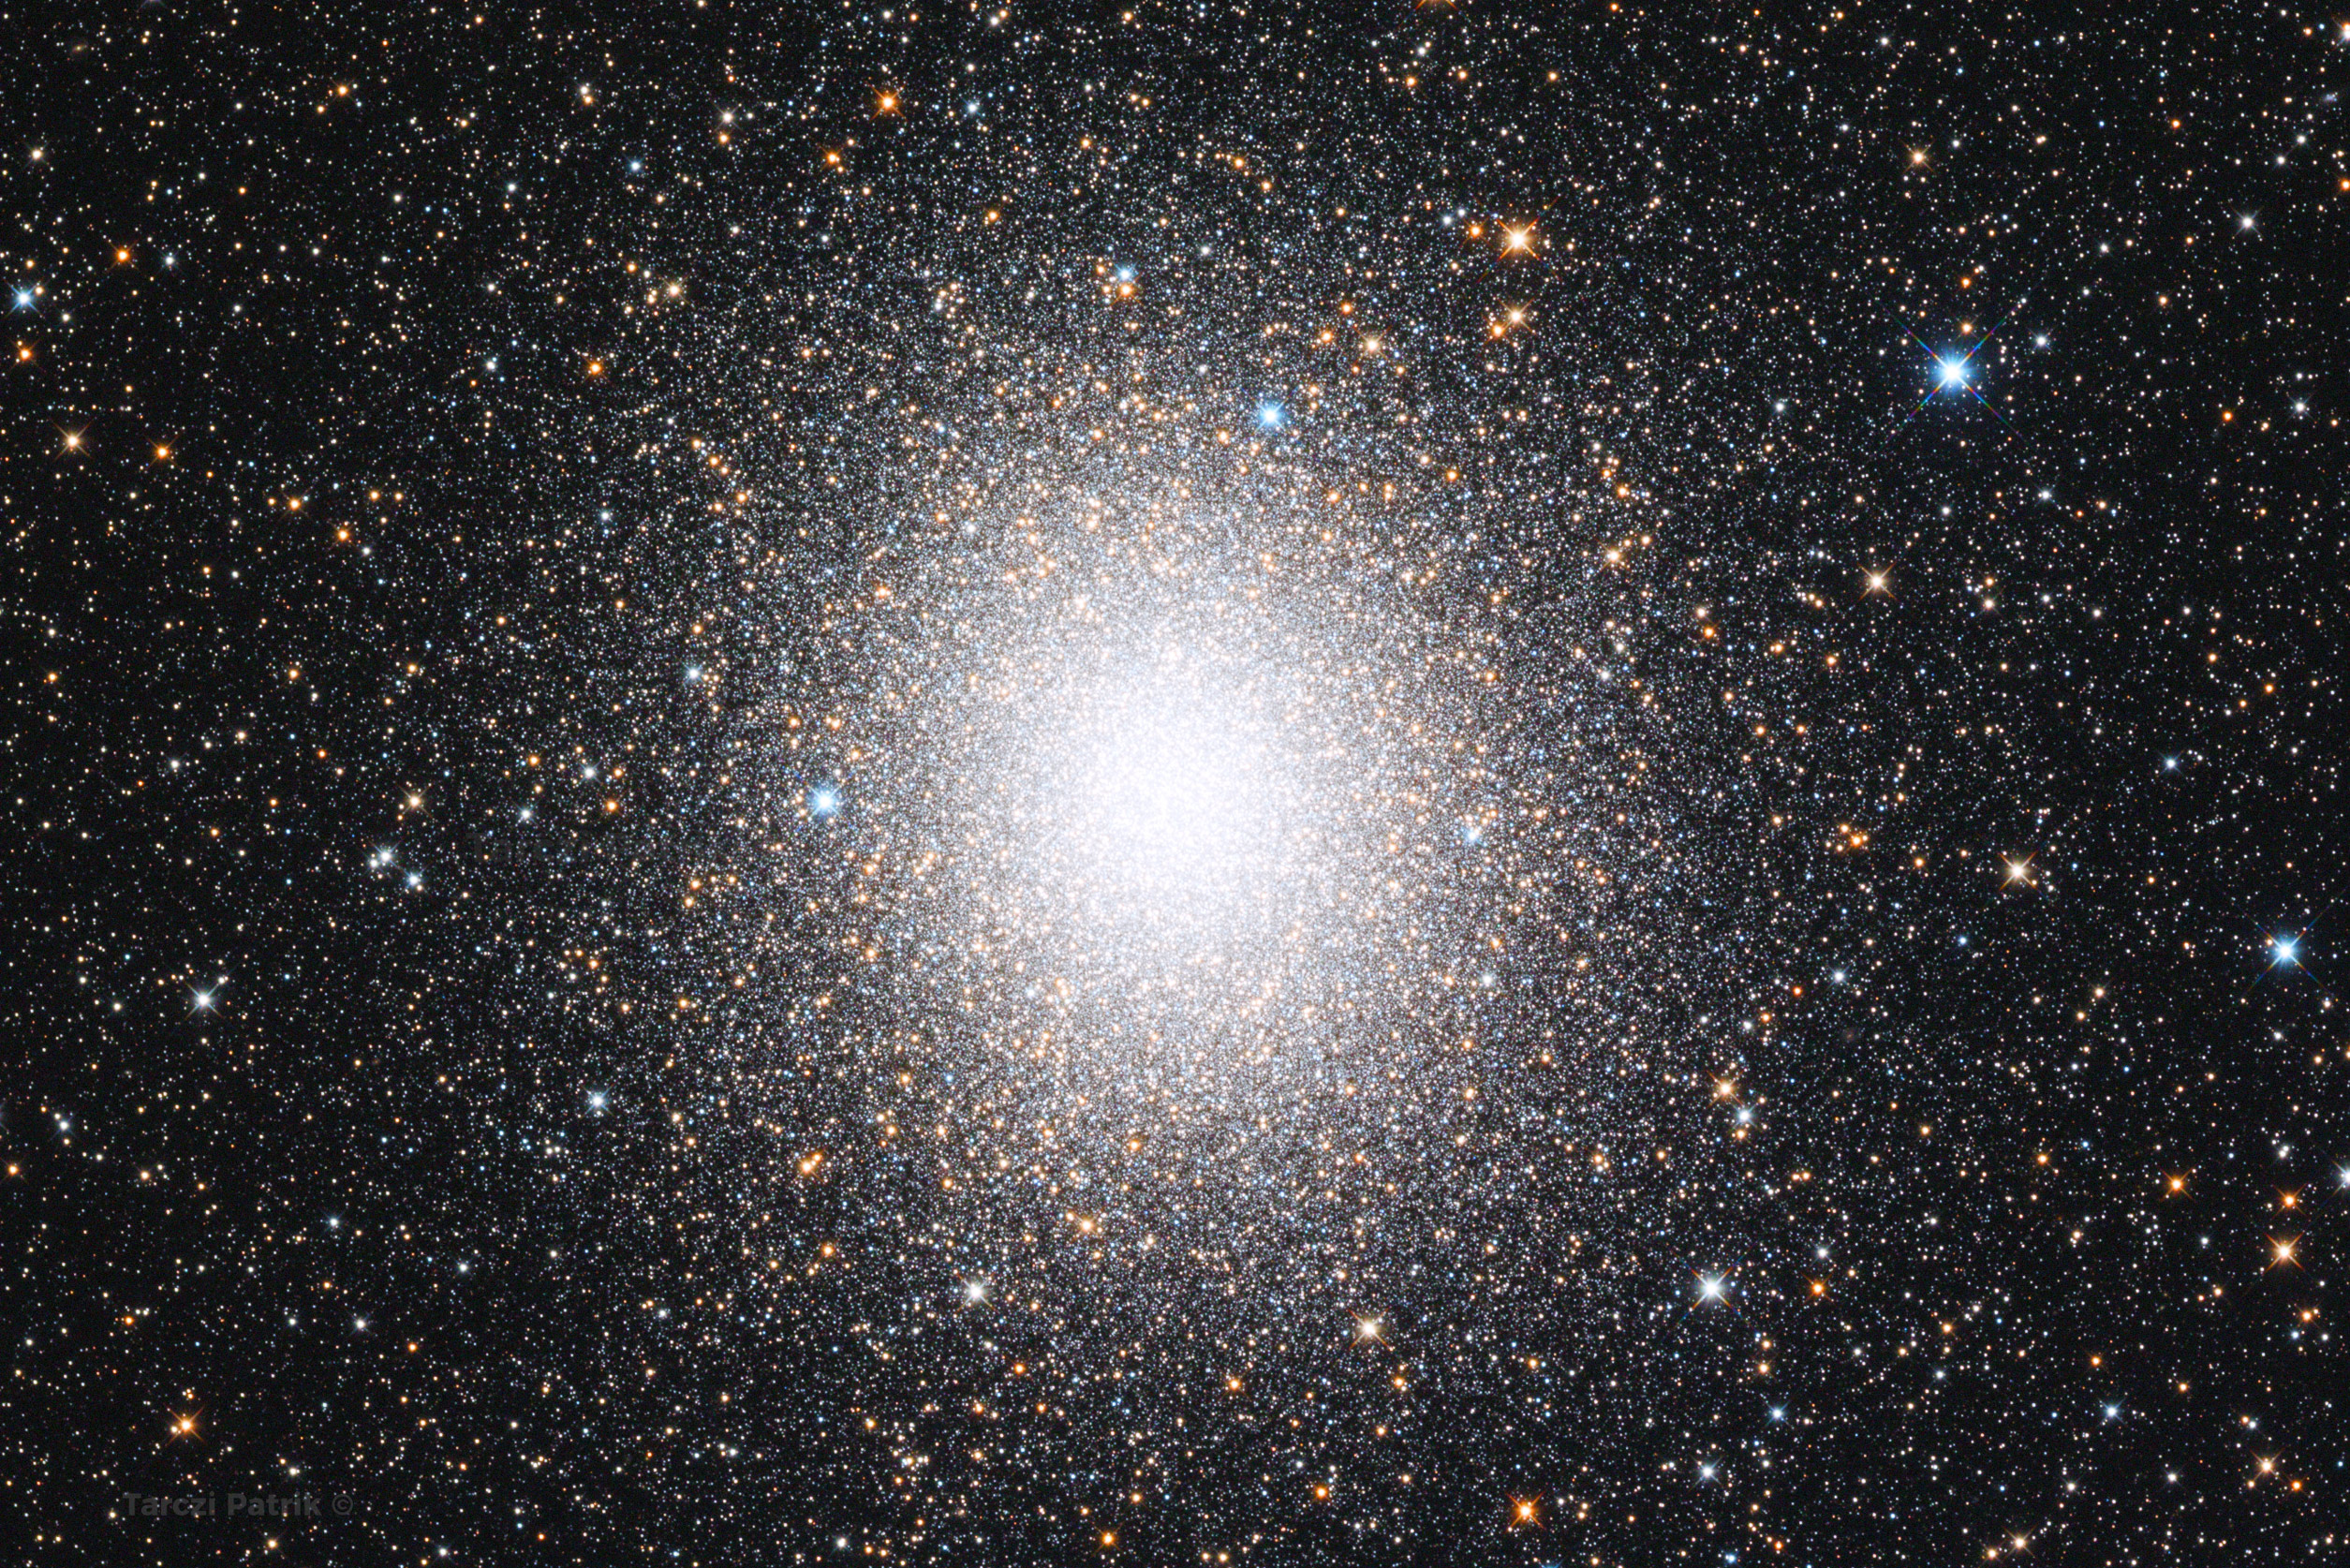 Globular star cluster Omega Centauri